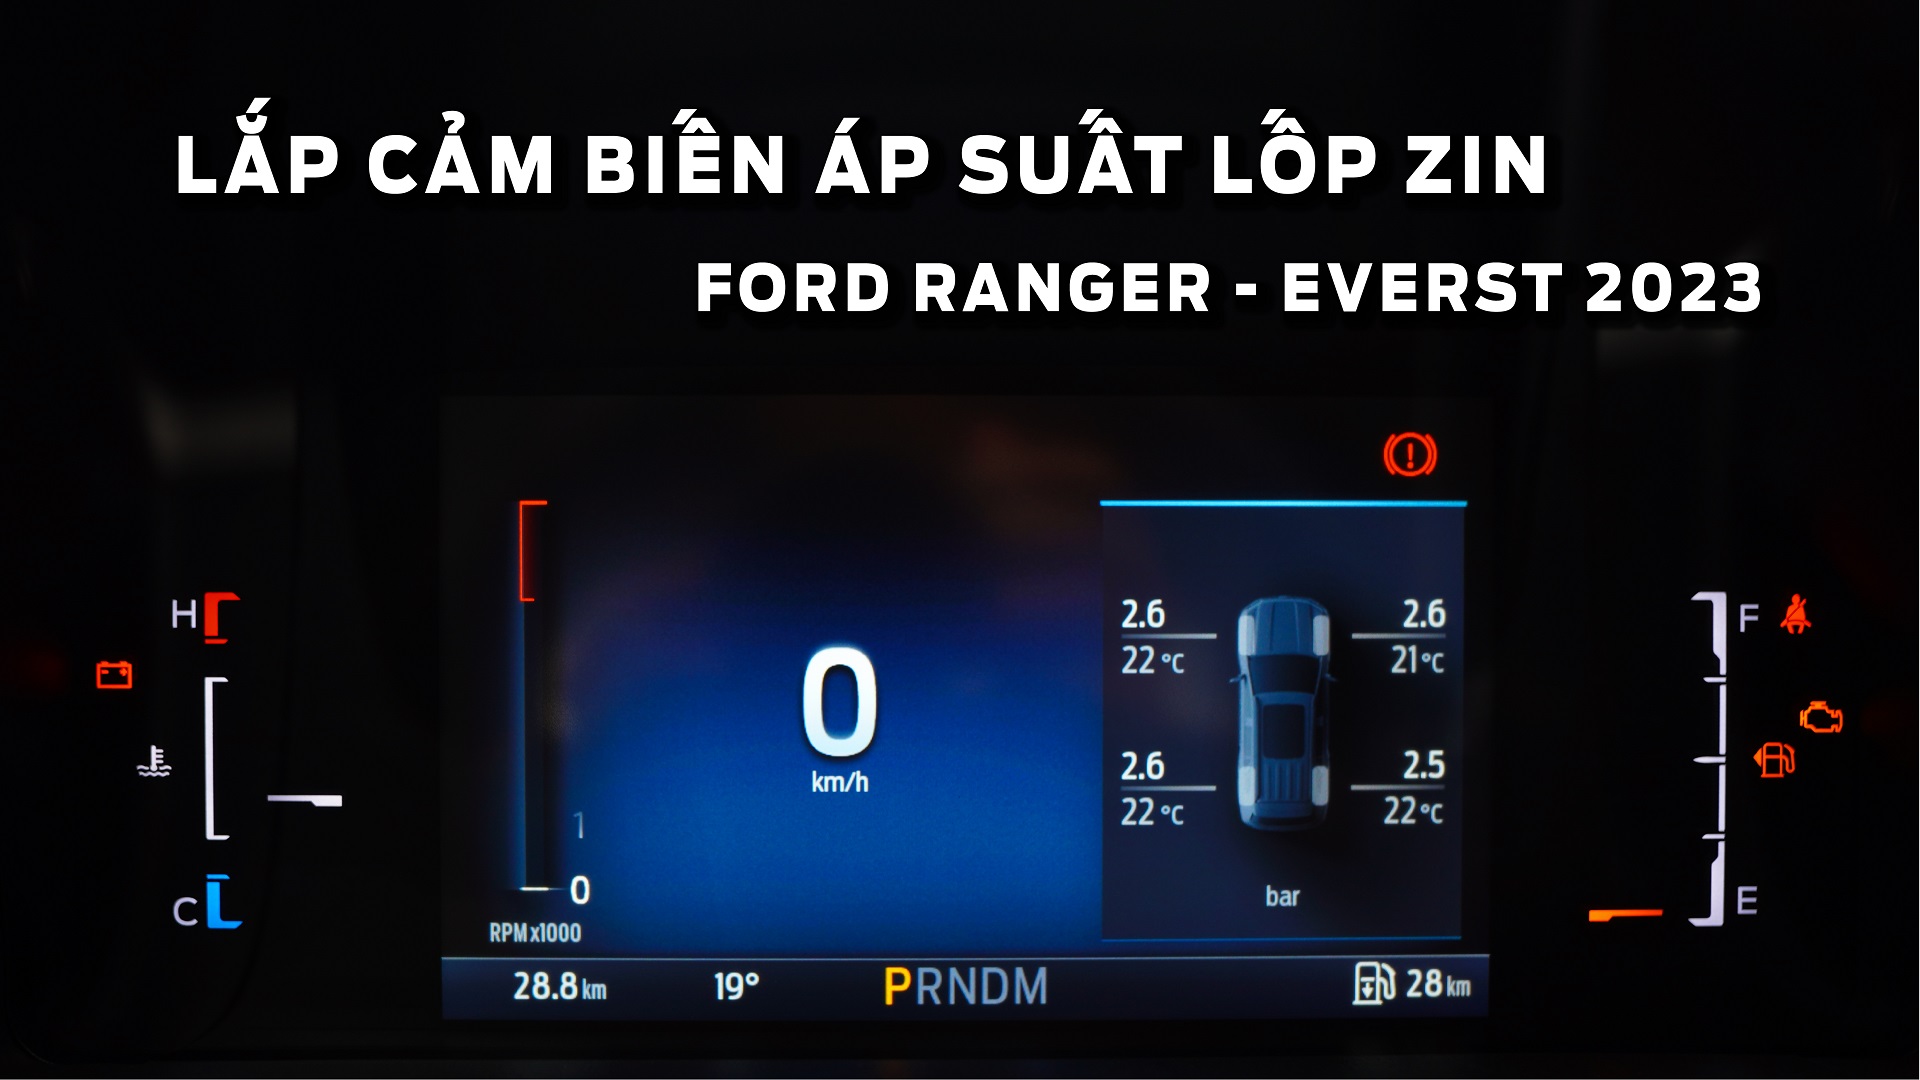 Cảm biến áp suất lốp cho Ford Ranger 2023 - Everest 2023